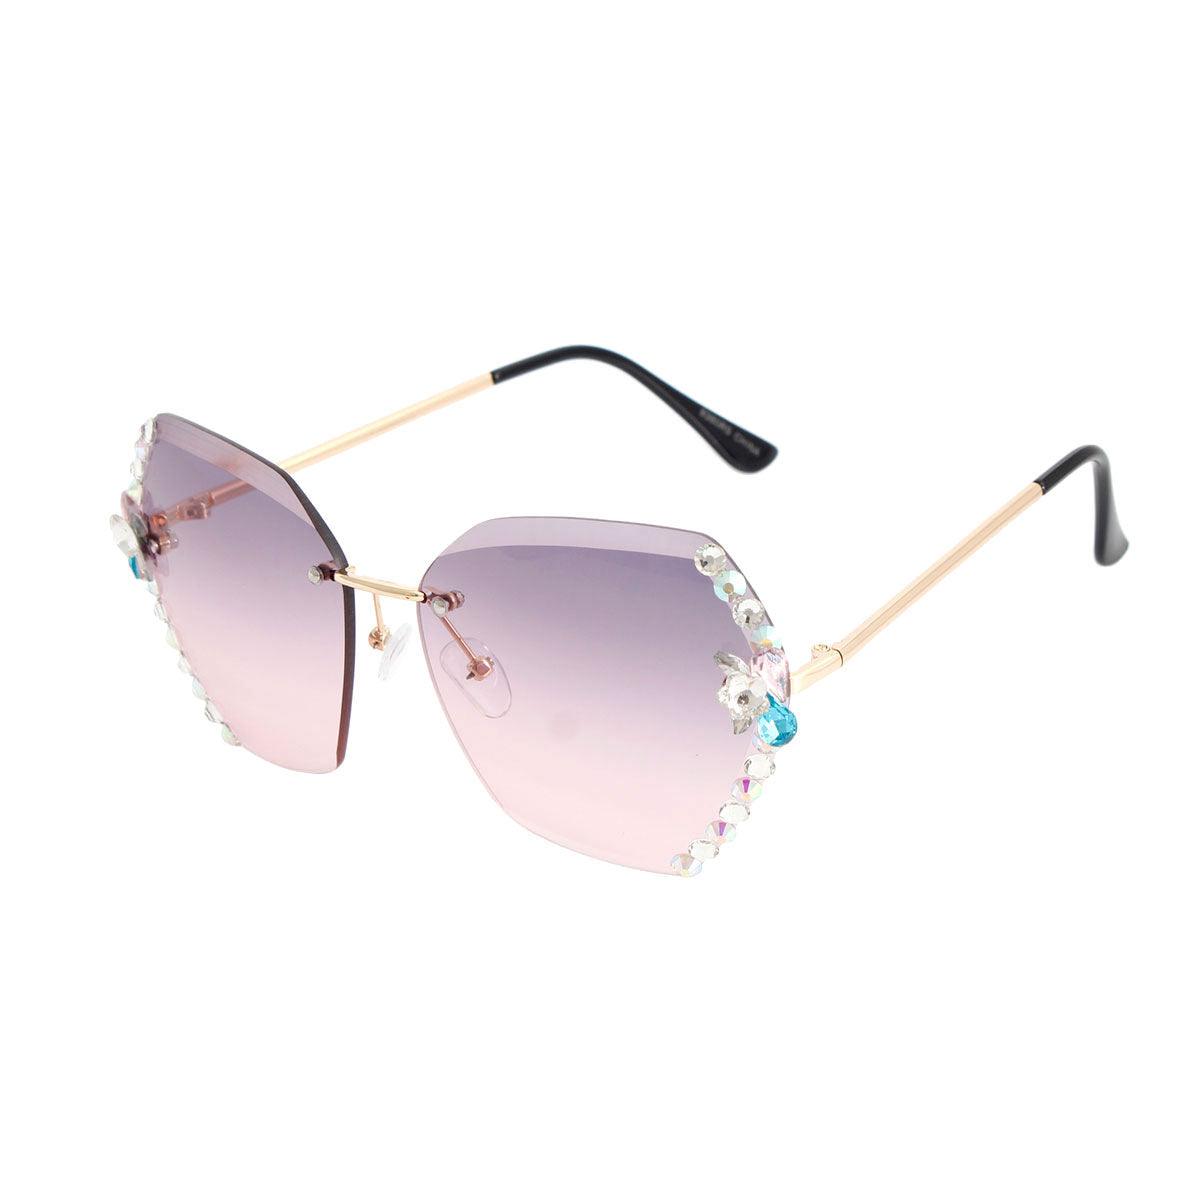 Sassy Rimless Rhinestone Purple Sunglasses for Women – Upgrade Your Style